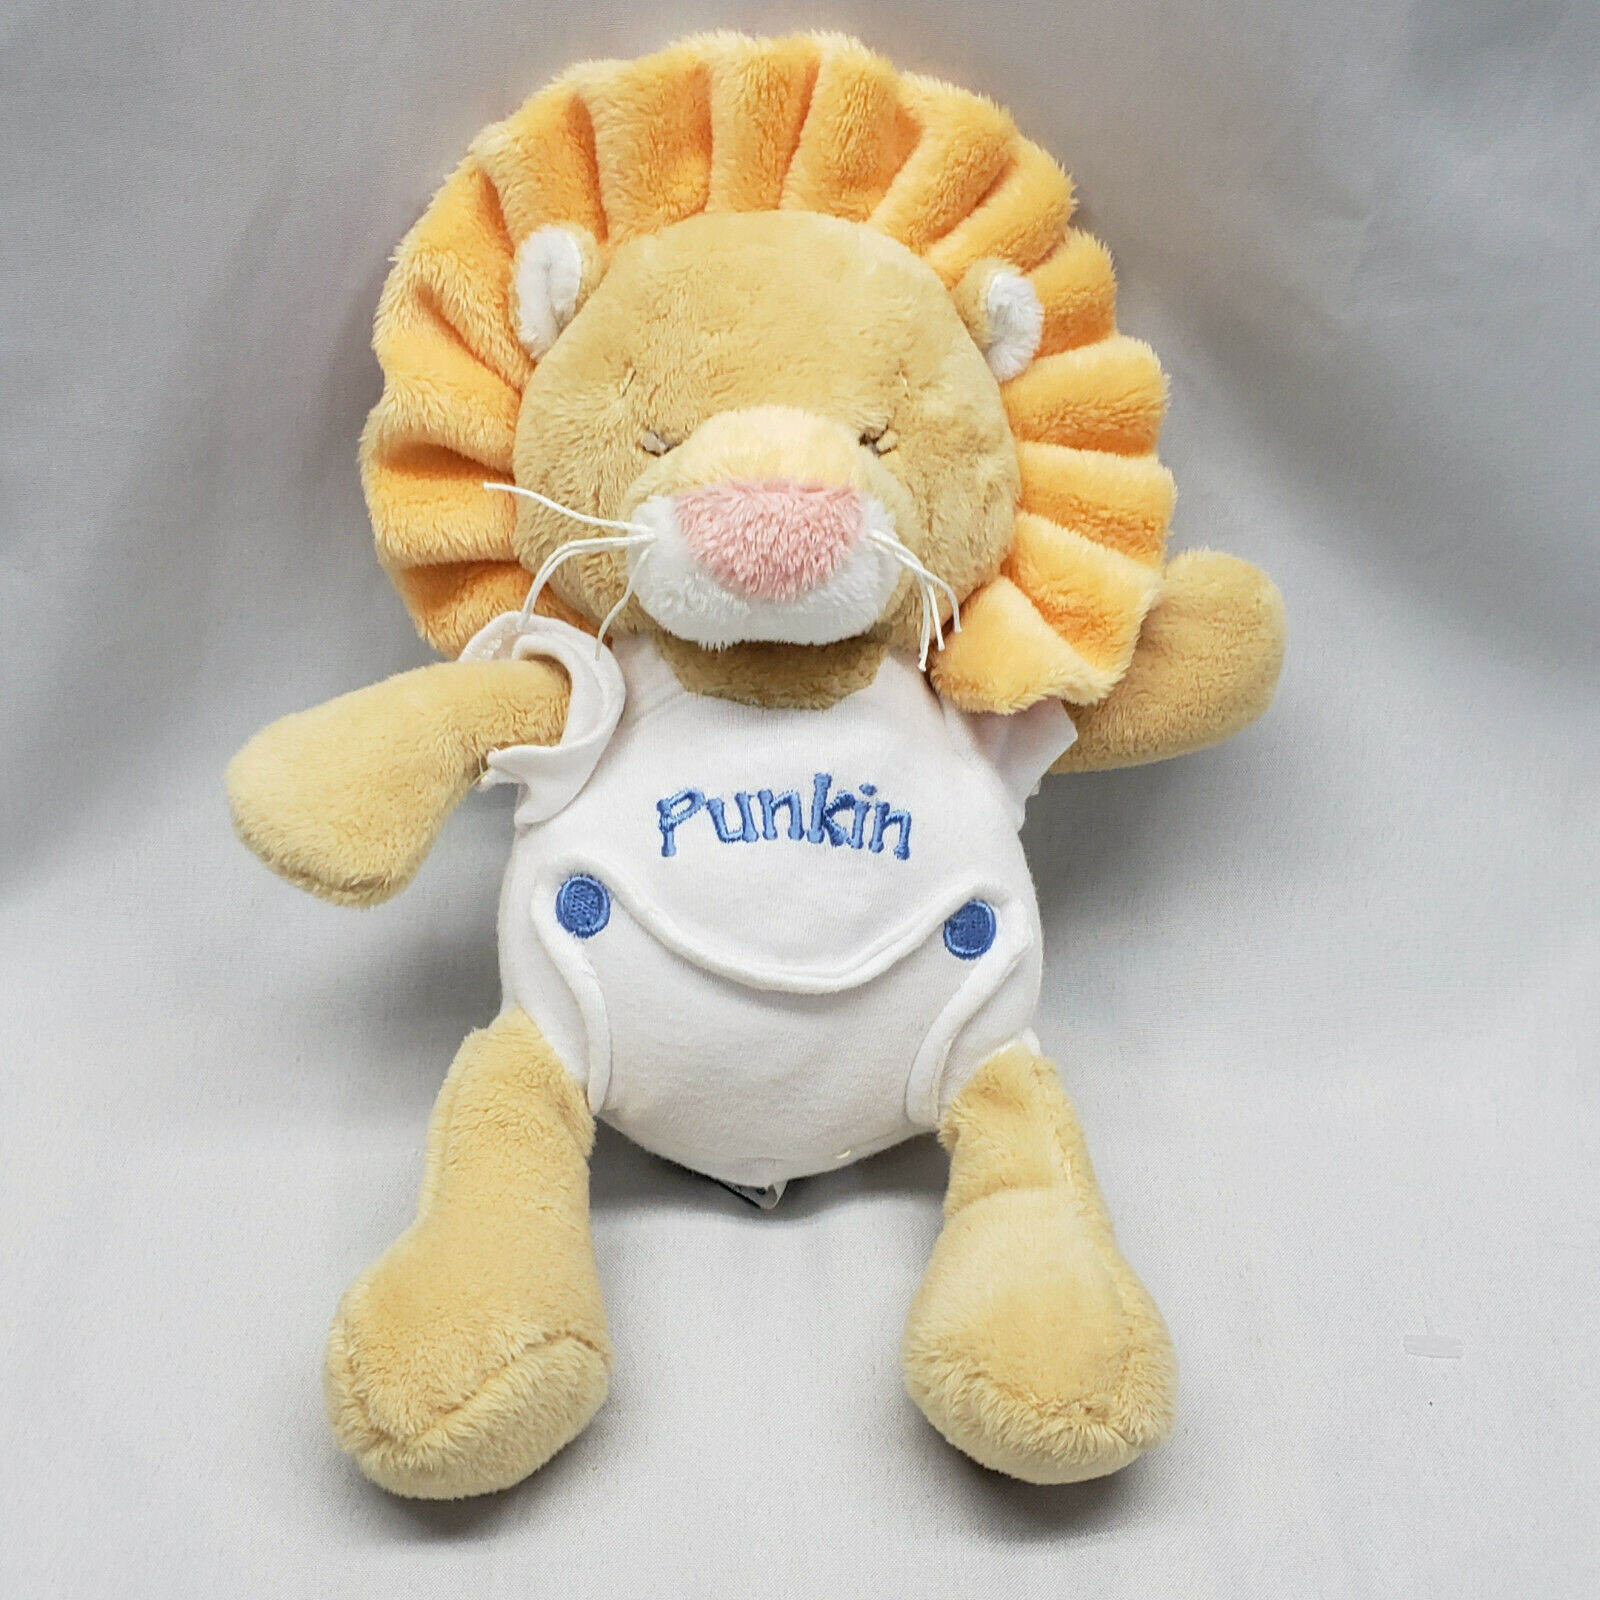 Primary image for Ganz Punkin Stuffed Plush Baby Lion Tan Orange White Blue Rattle Chime Toy 10"